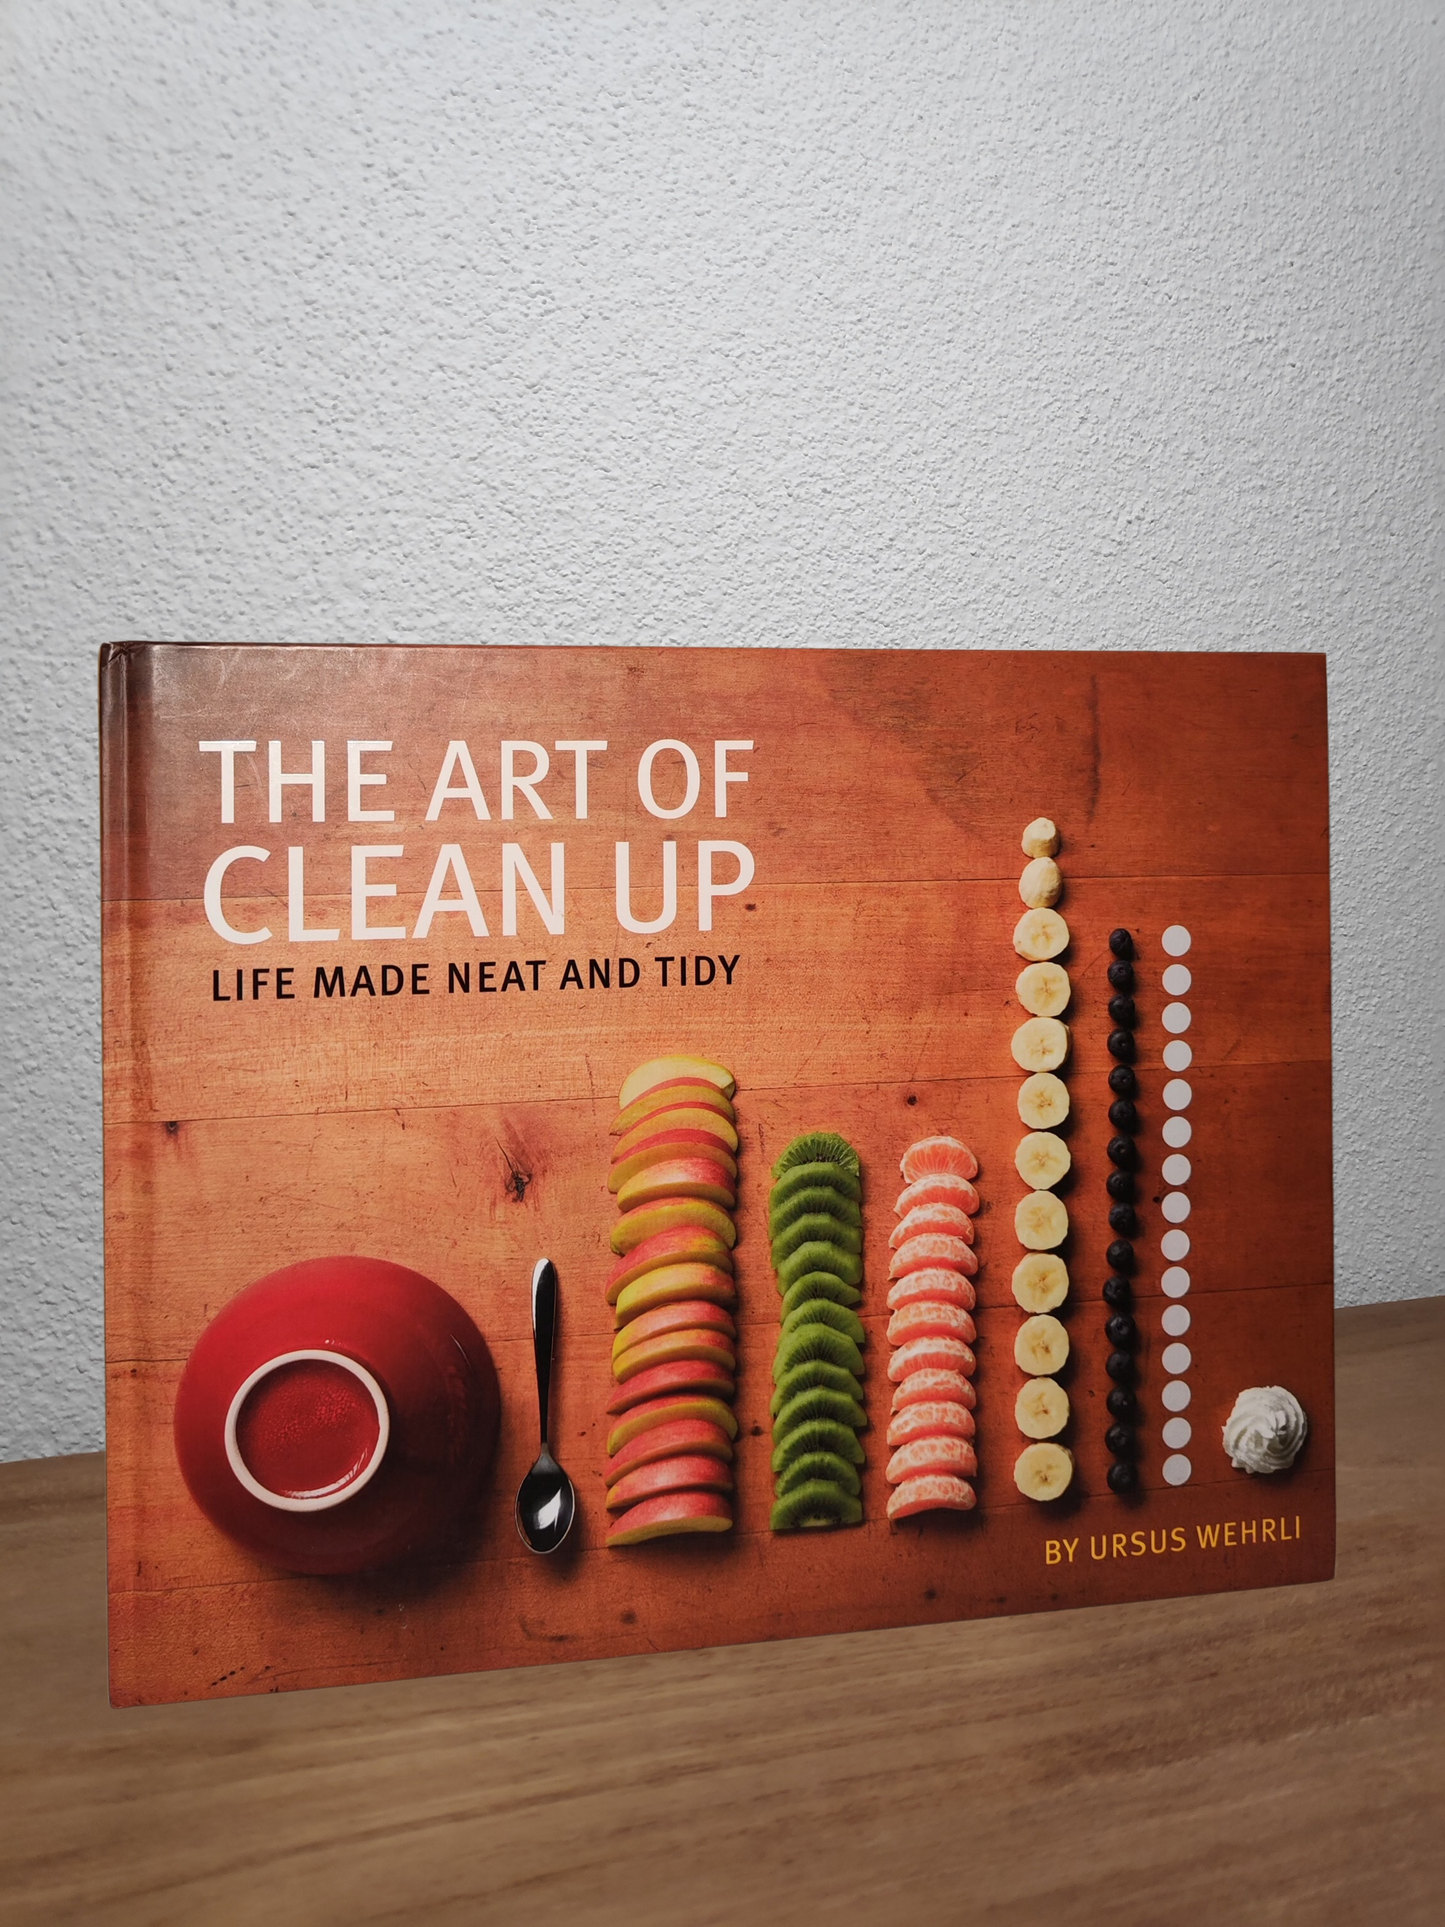 Ursus Wehrli - The Art of Clean Up - Second-hand english book to deliver in Zurich & Switzerland